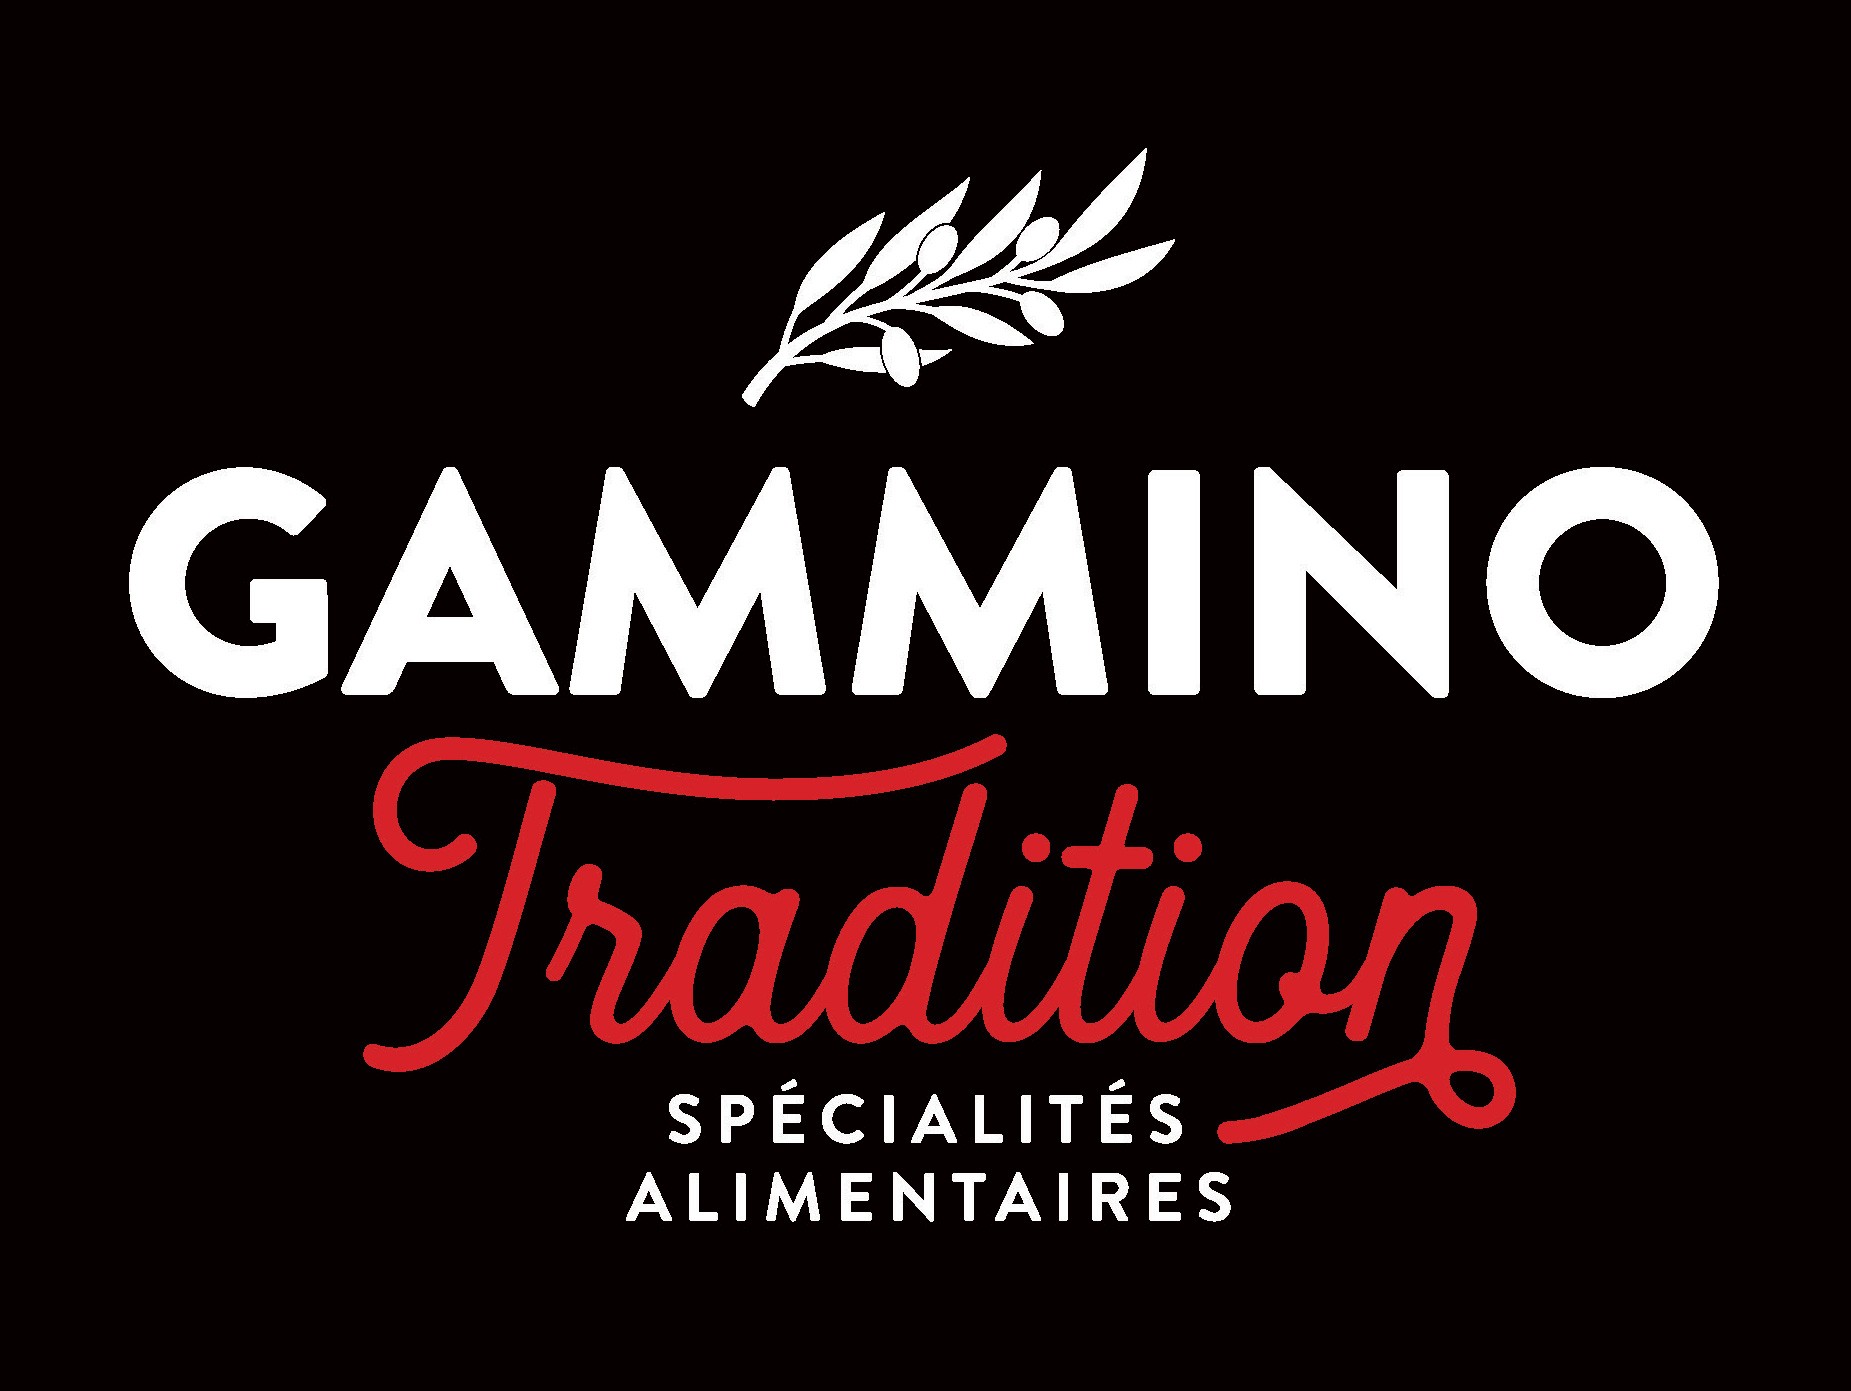 Gammino Tradition